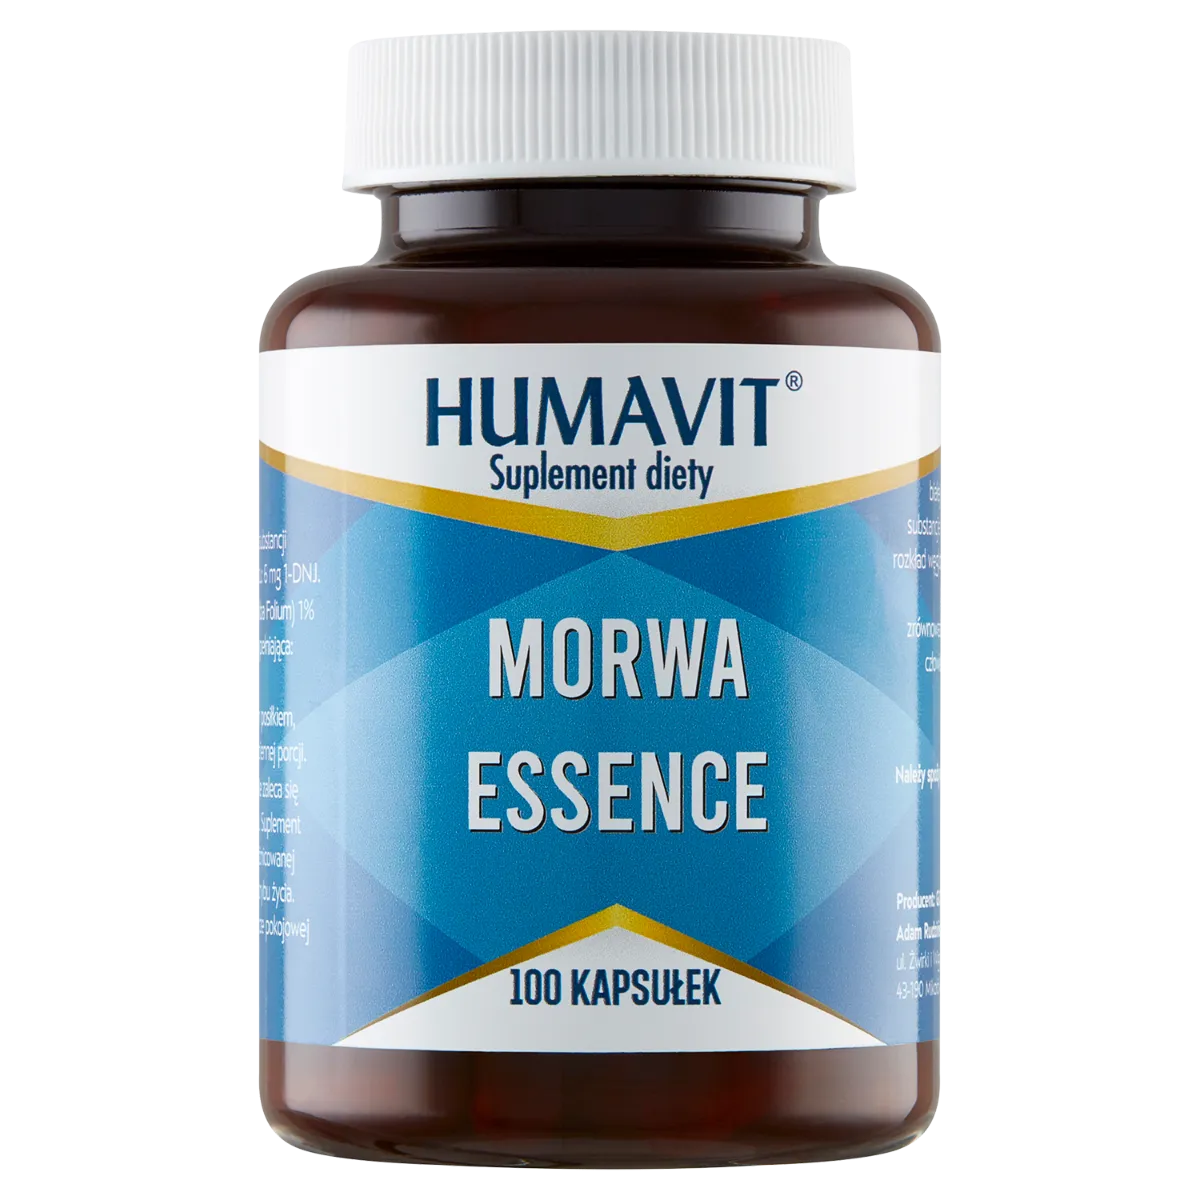 Humavit morwa essence, suplement diety, 100 kapsułek